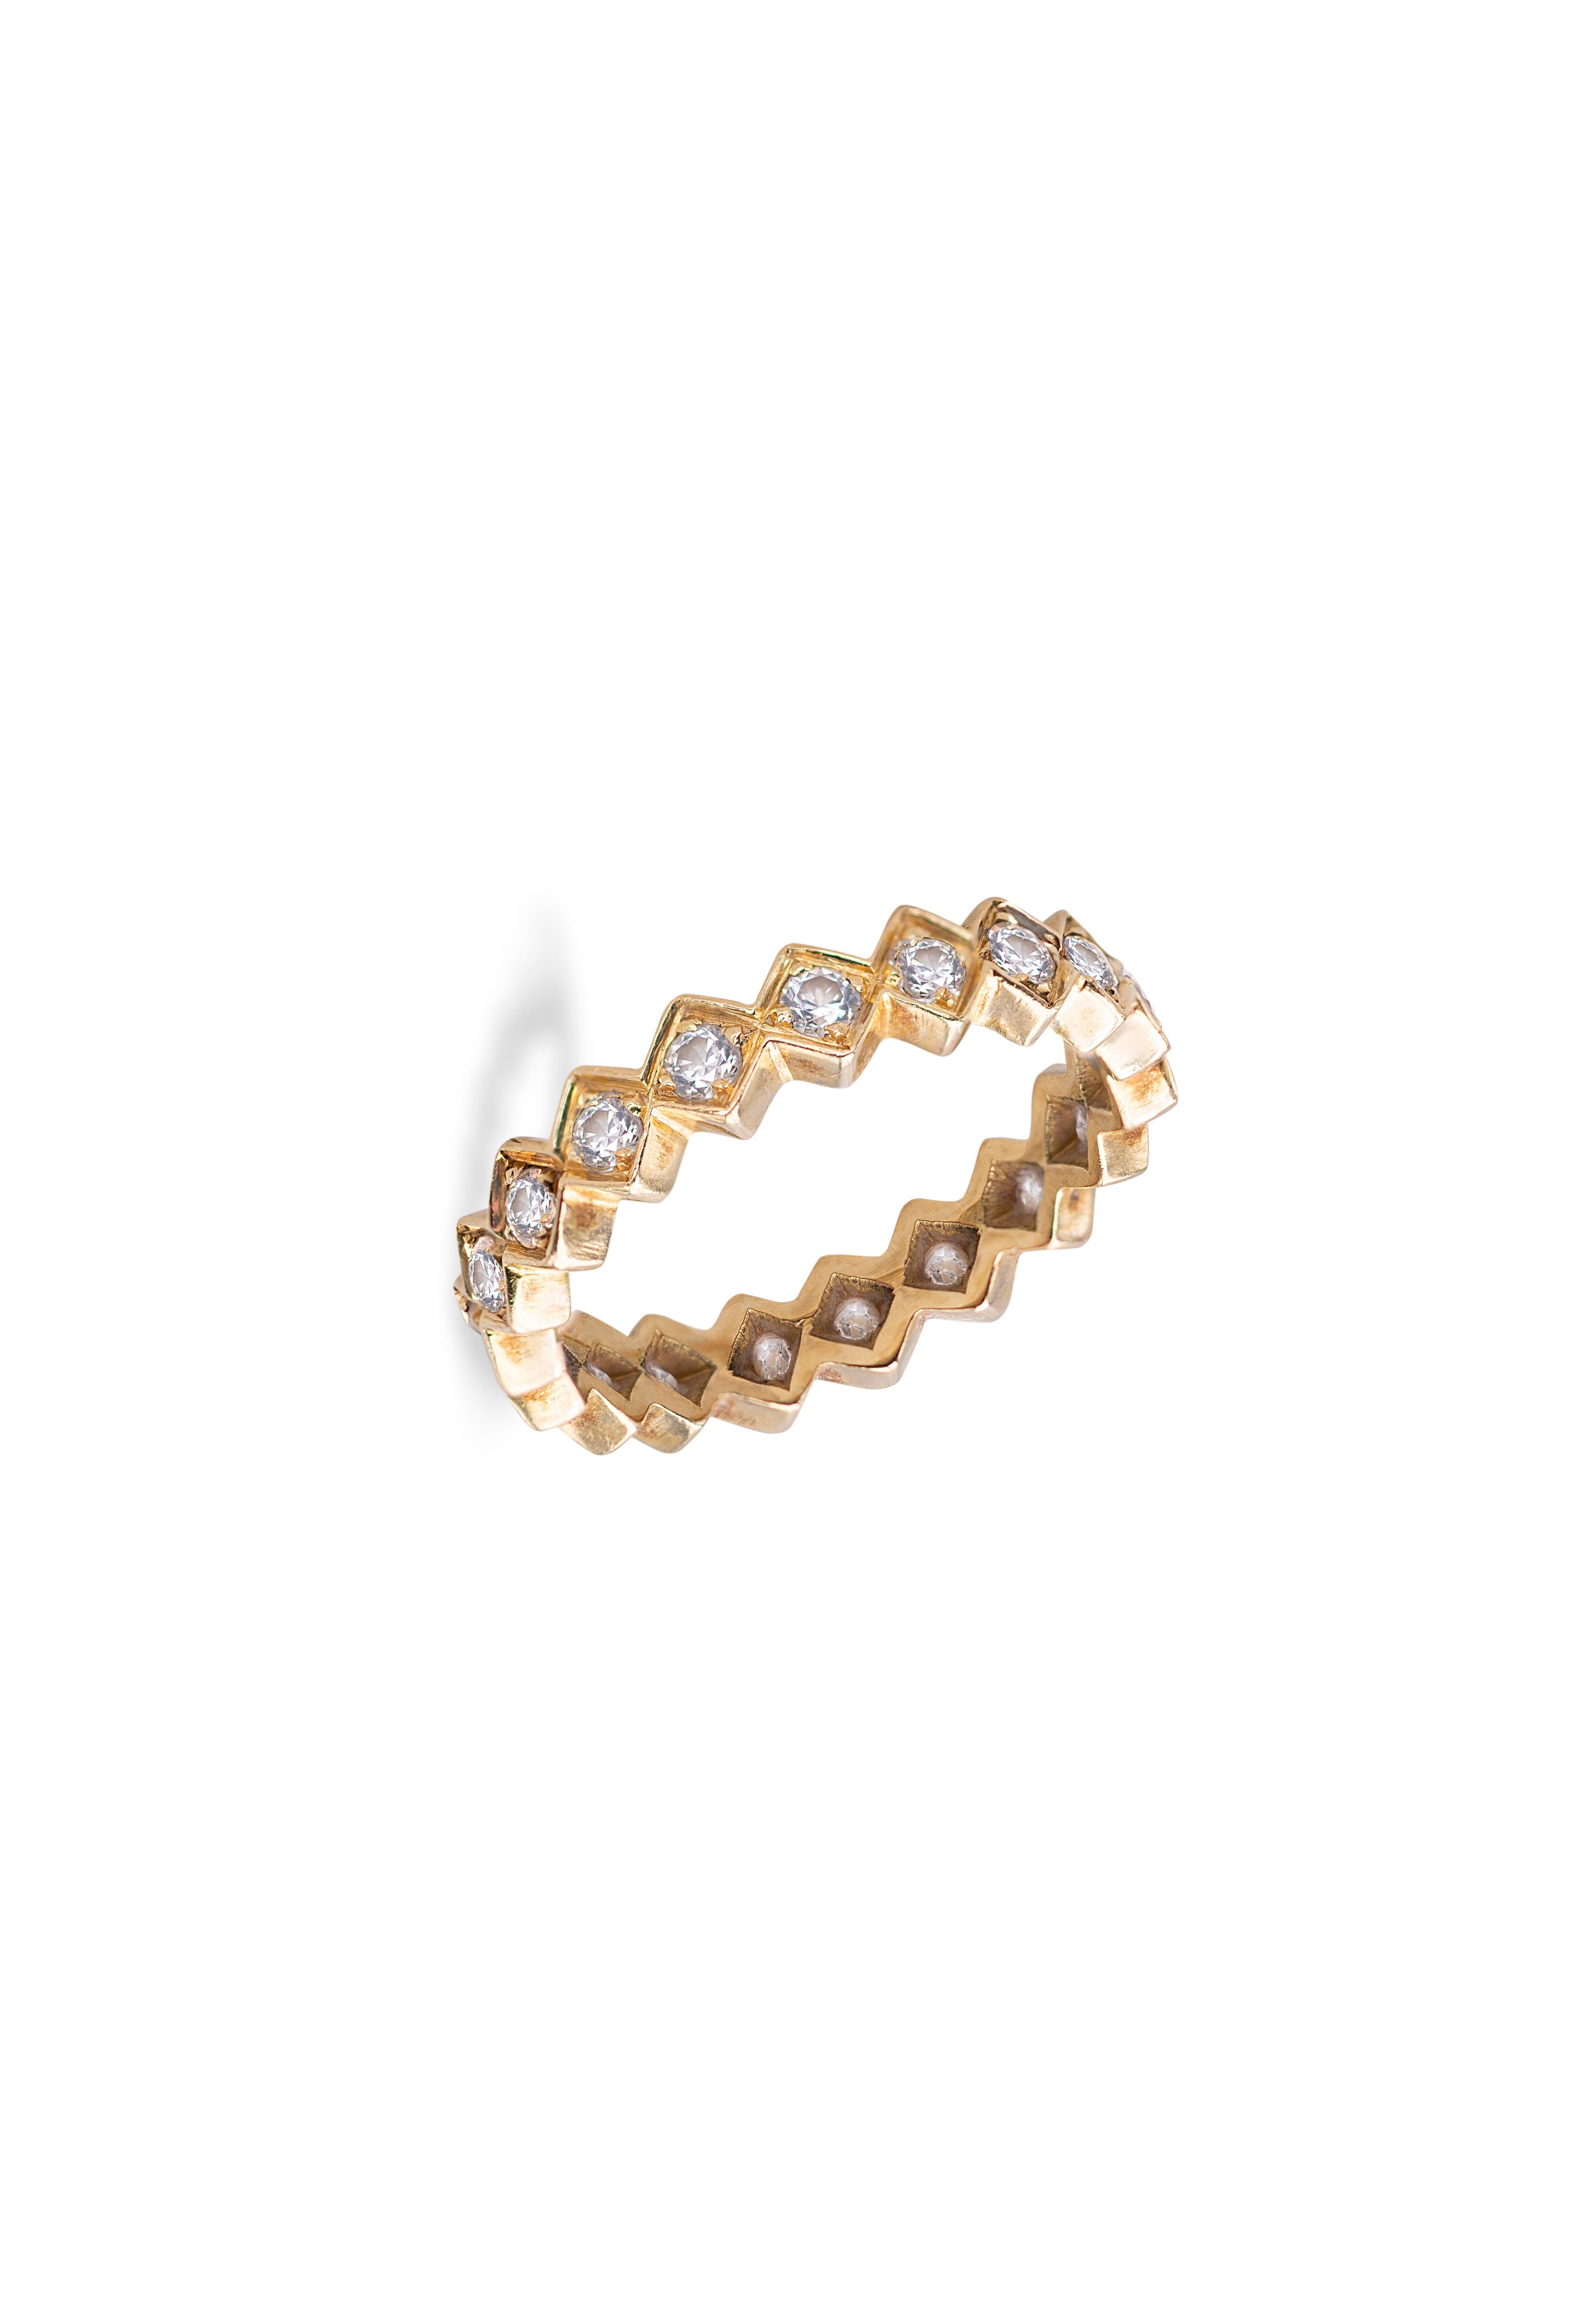  0.80 Carat White Diamonds 18 Karat Yellow Gold Contemporary Unisex Design Ring For Sale 6